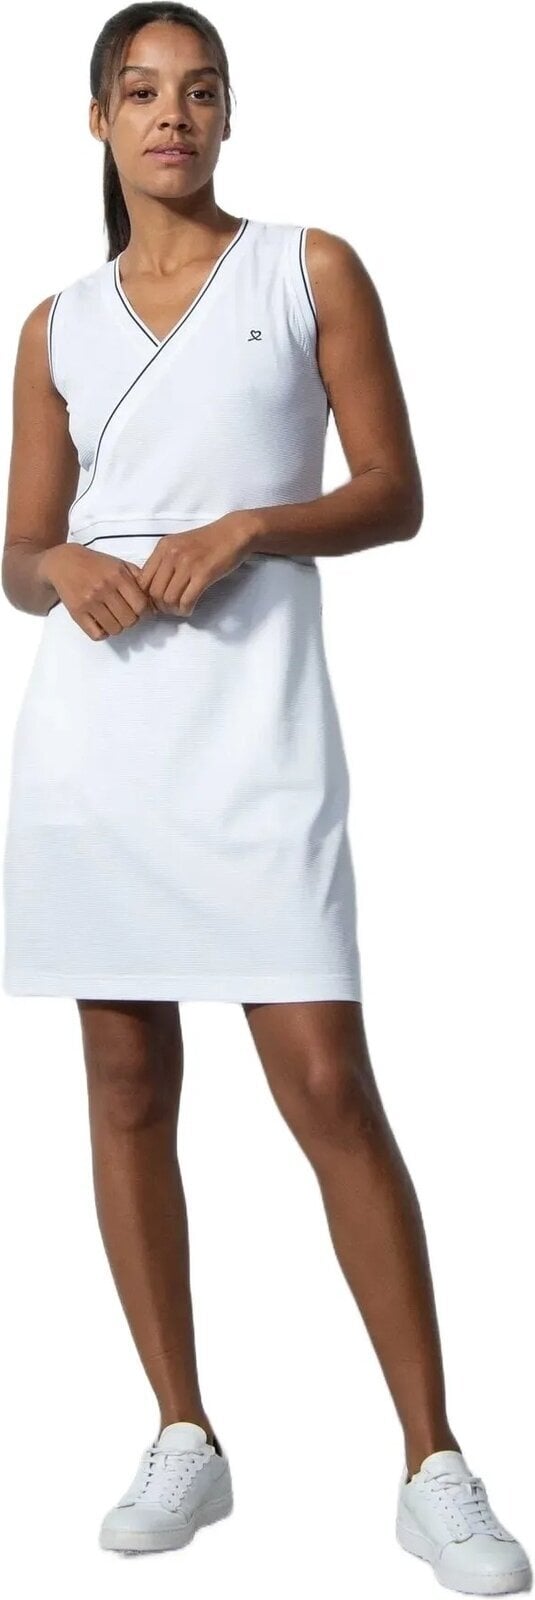 Skirt / Dress Daily Sports Paris Sleeveless Dress White S